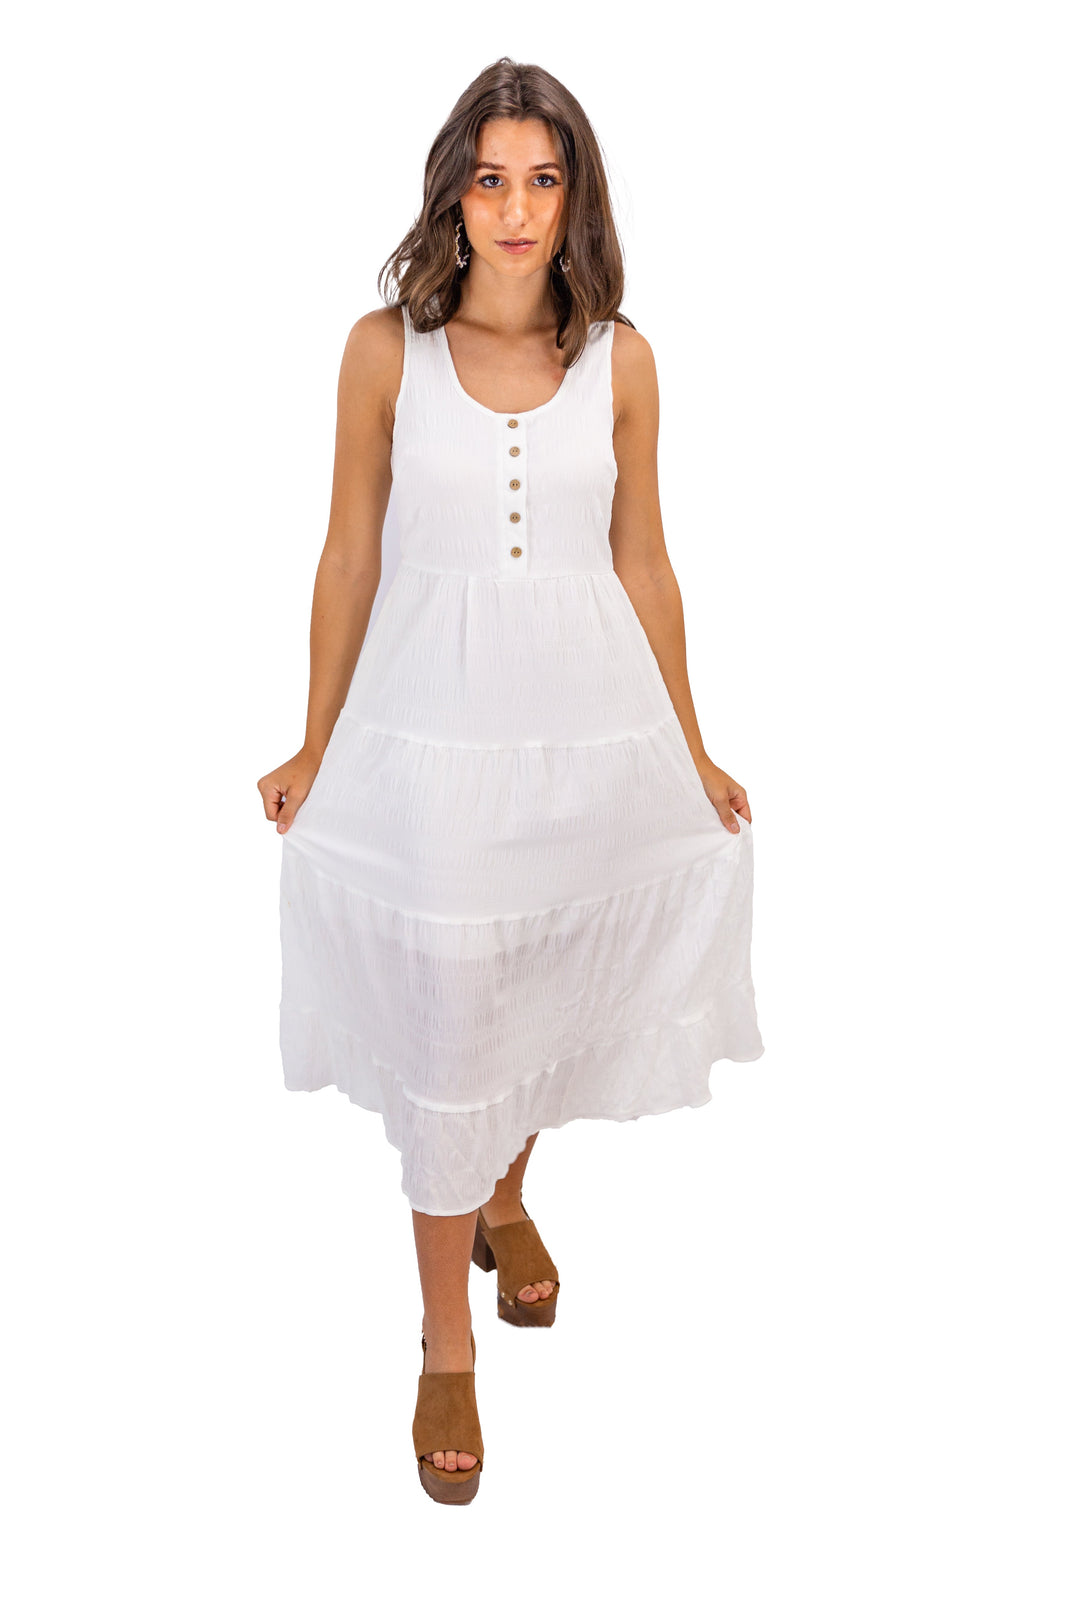 A-line Midi White Dress With Pockets & Ruffles